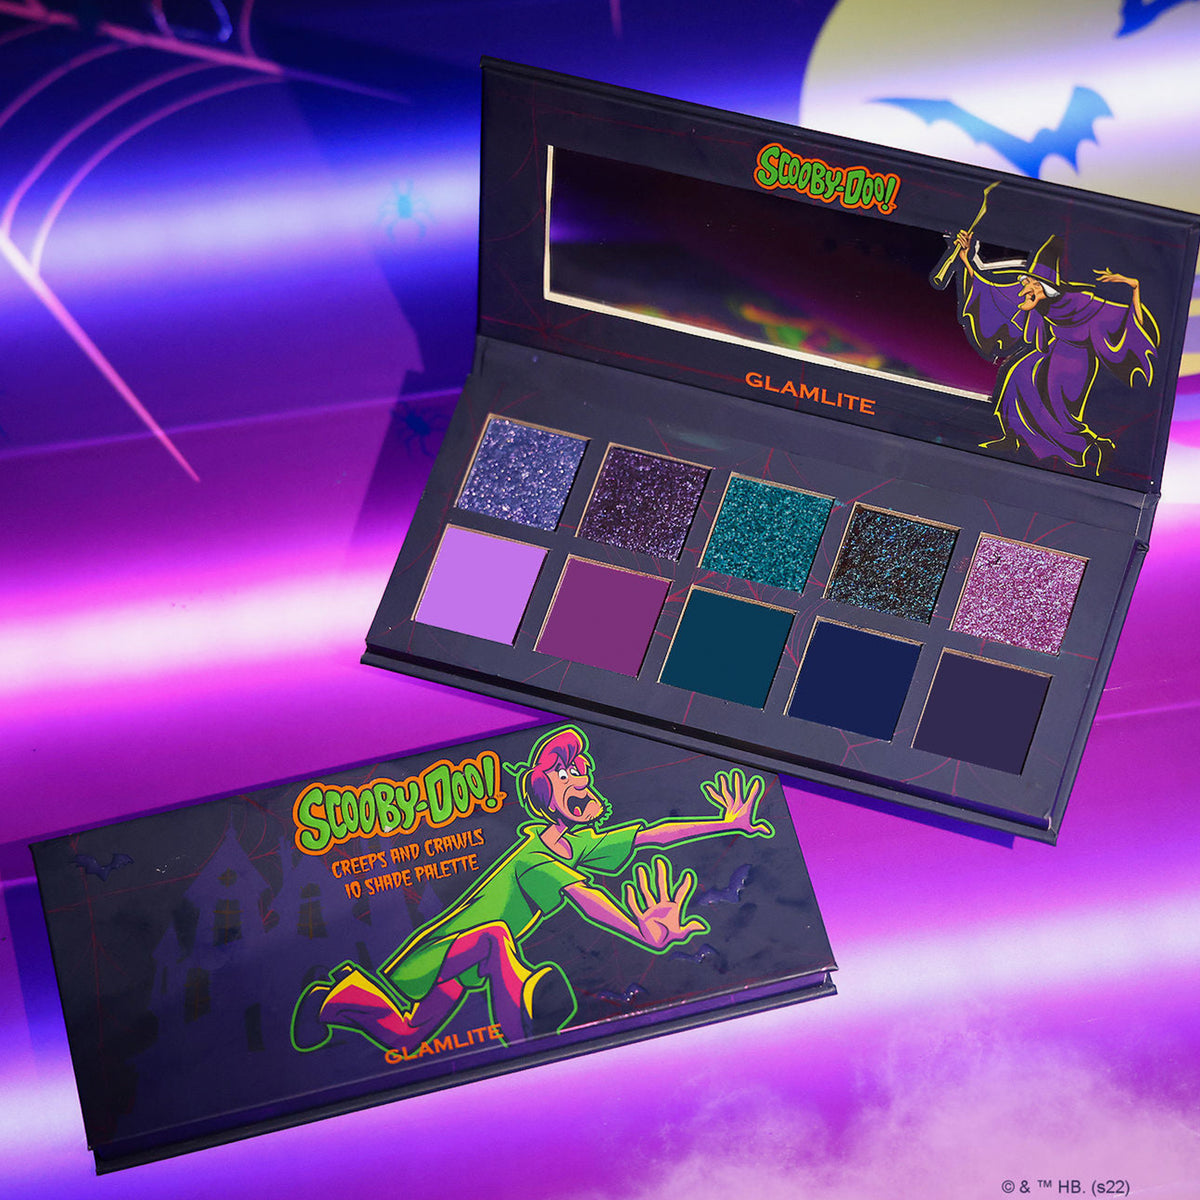 Glamlite Cosmetics | Scooby-Doo™ x Glamlite Creeps & Crawls Palette